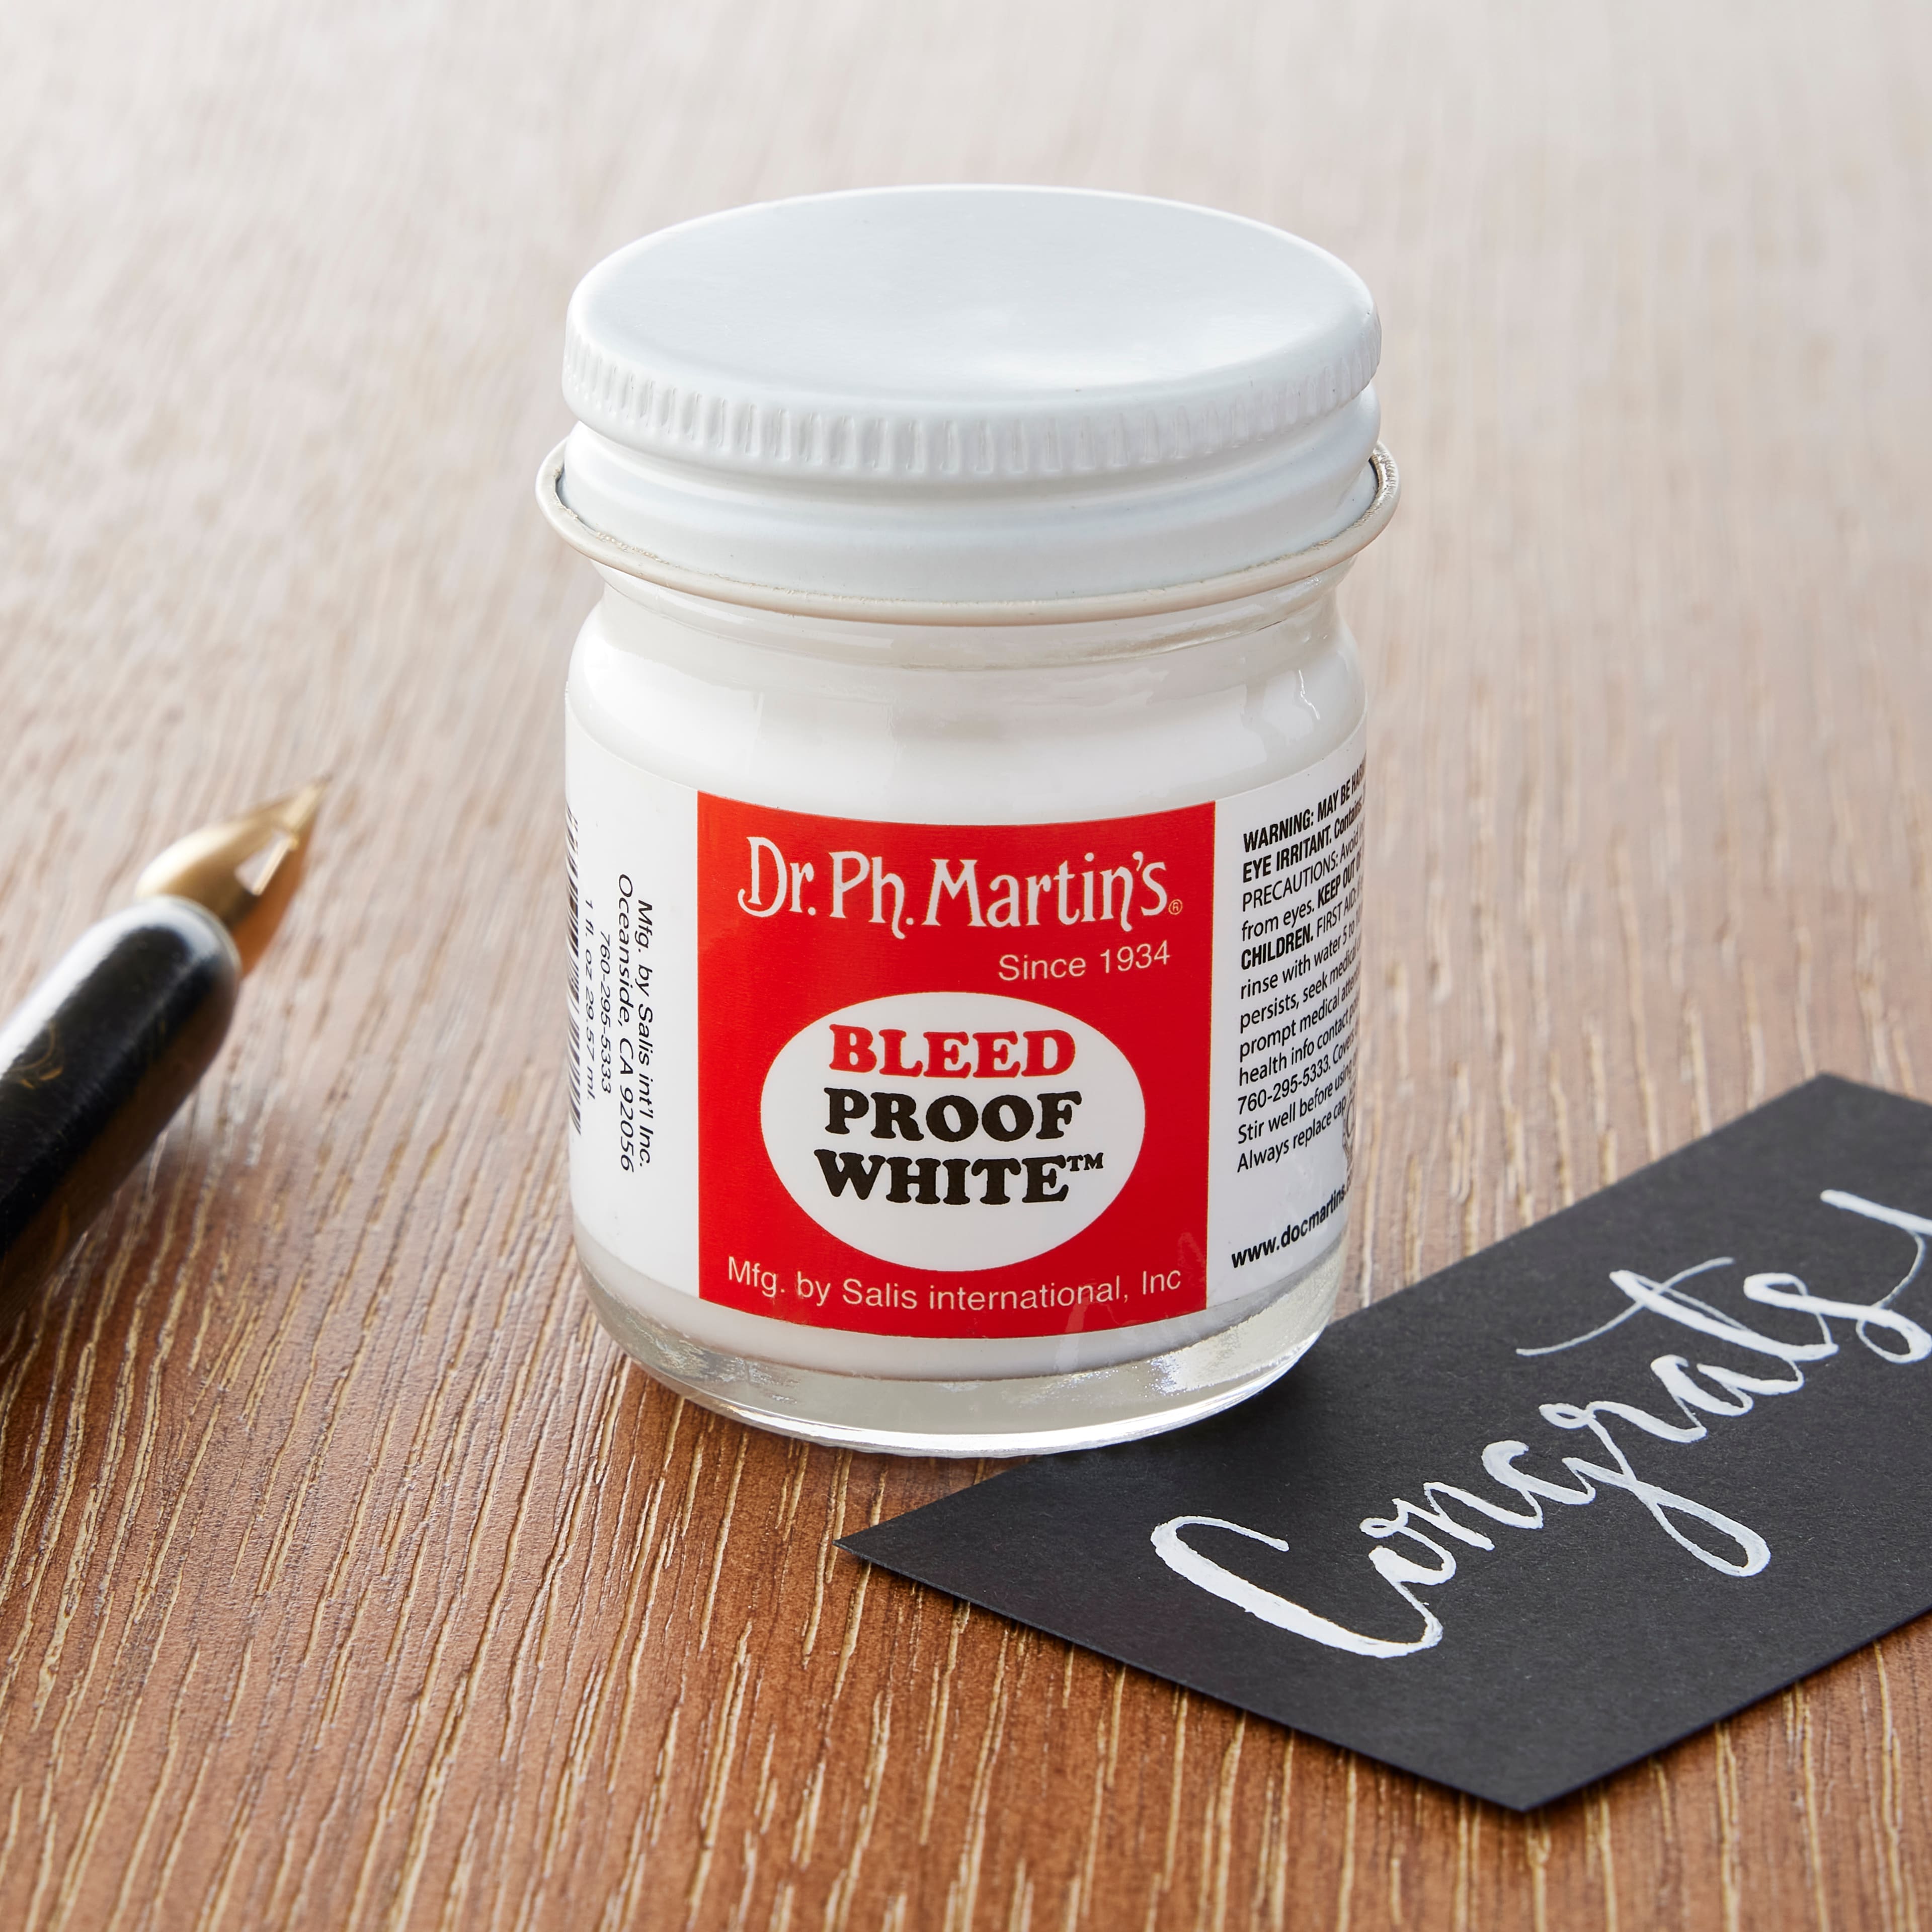 Dr Ph Martin's Bleed Proof White 1 Fl Oz - Blots Pen & Ink Supplies